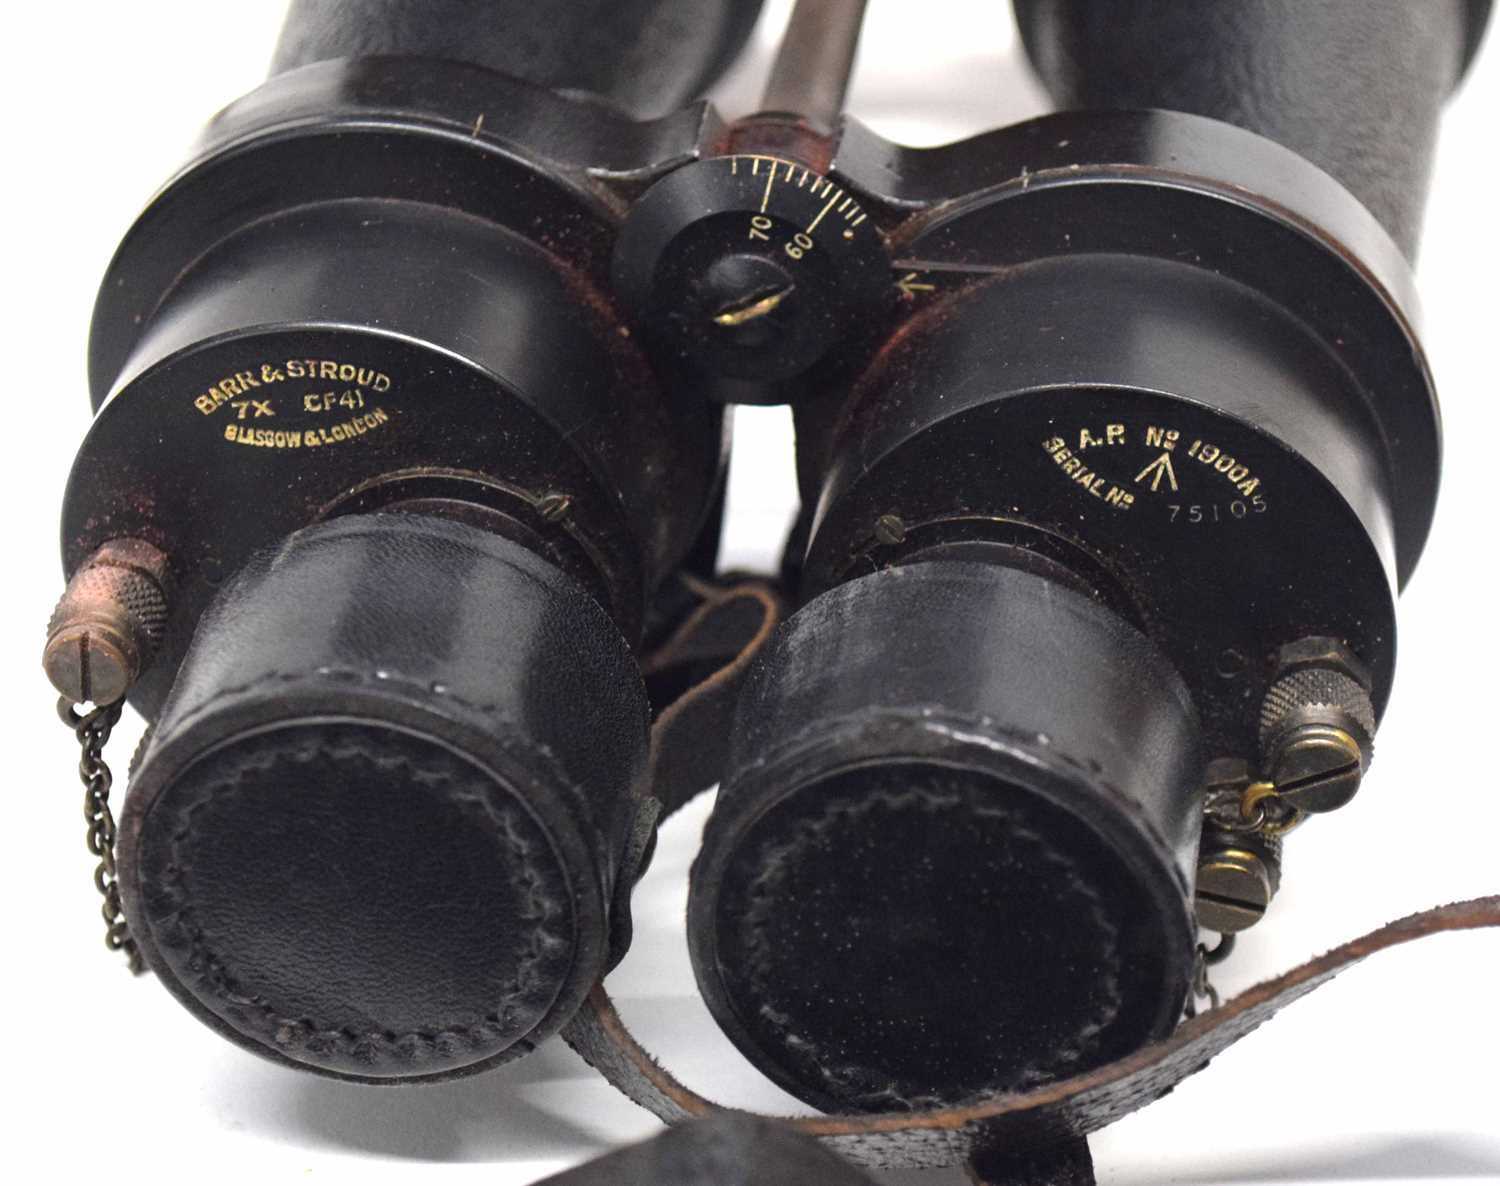 Pair of WWII Barr & Stroud CF41 Naval binoculars and case, serial no 75105 - Image 4 of 4